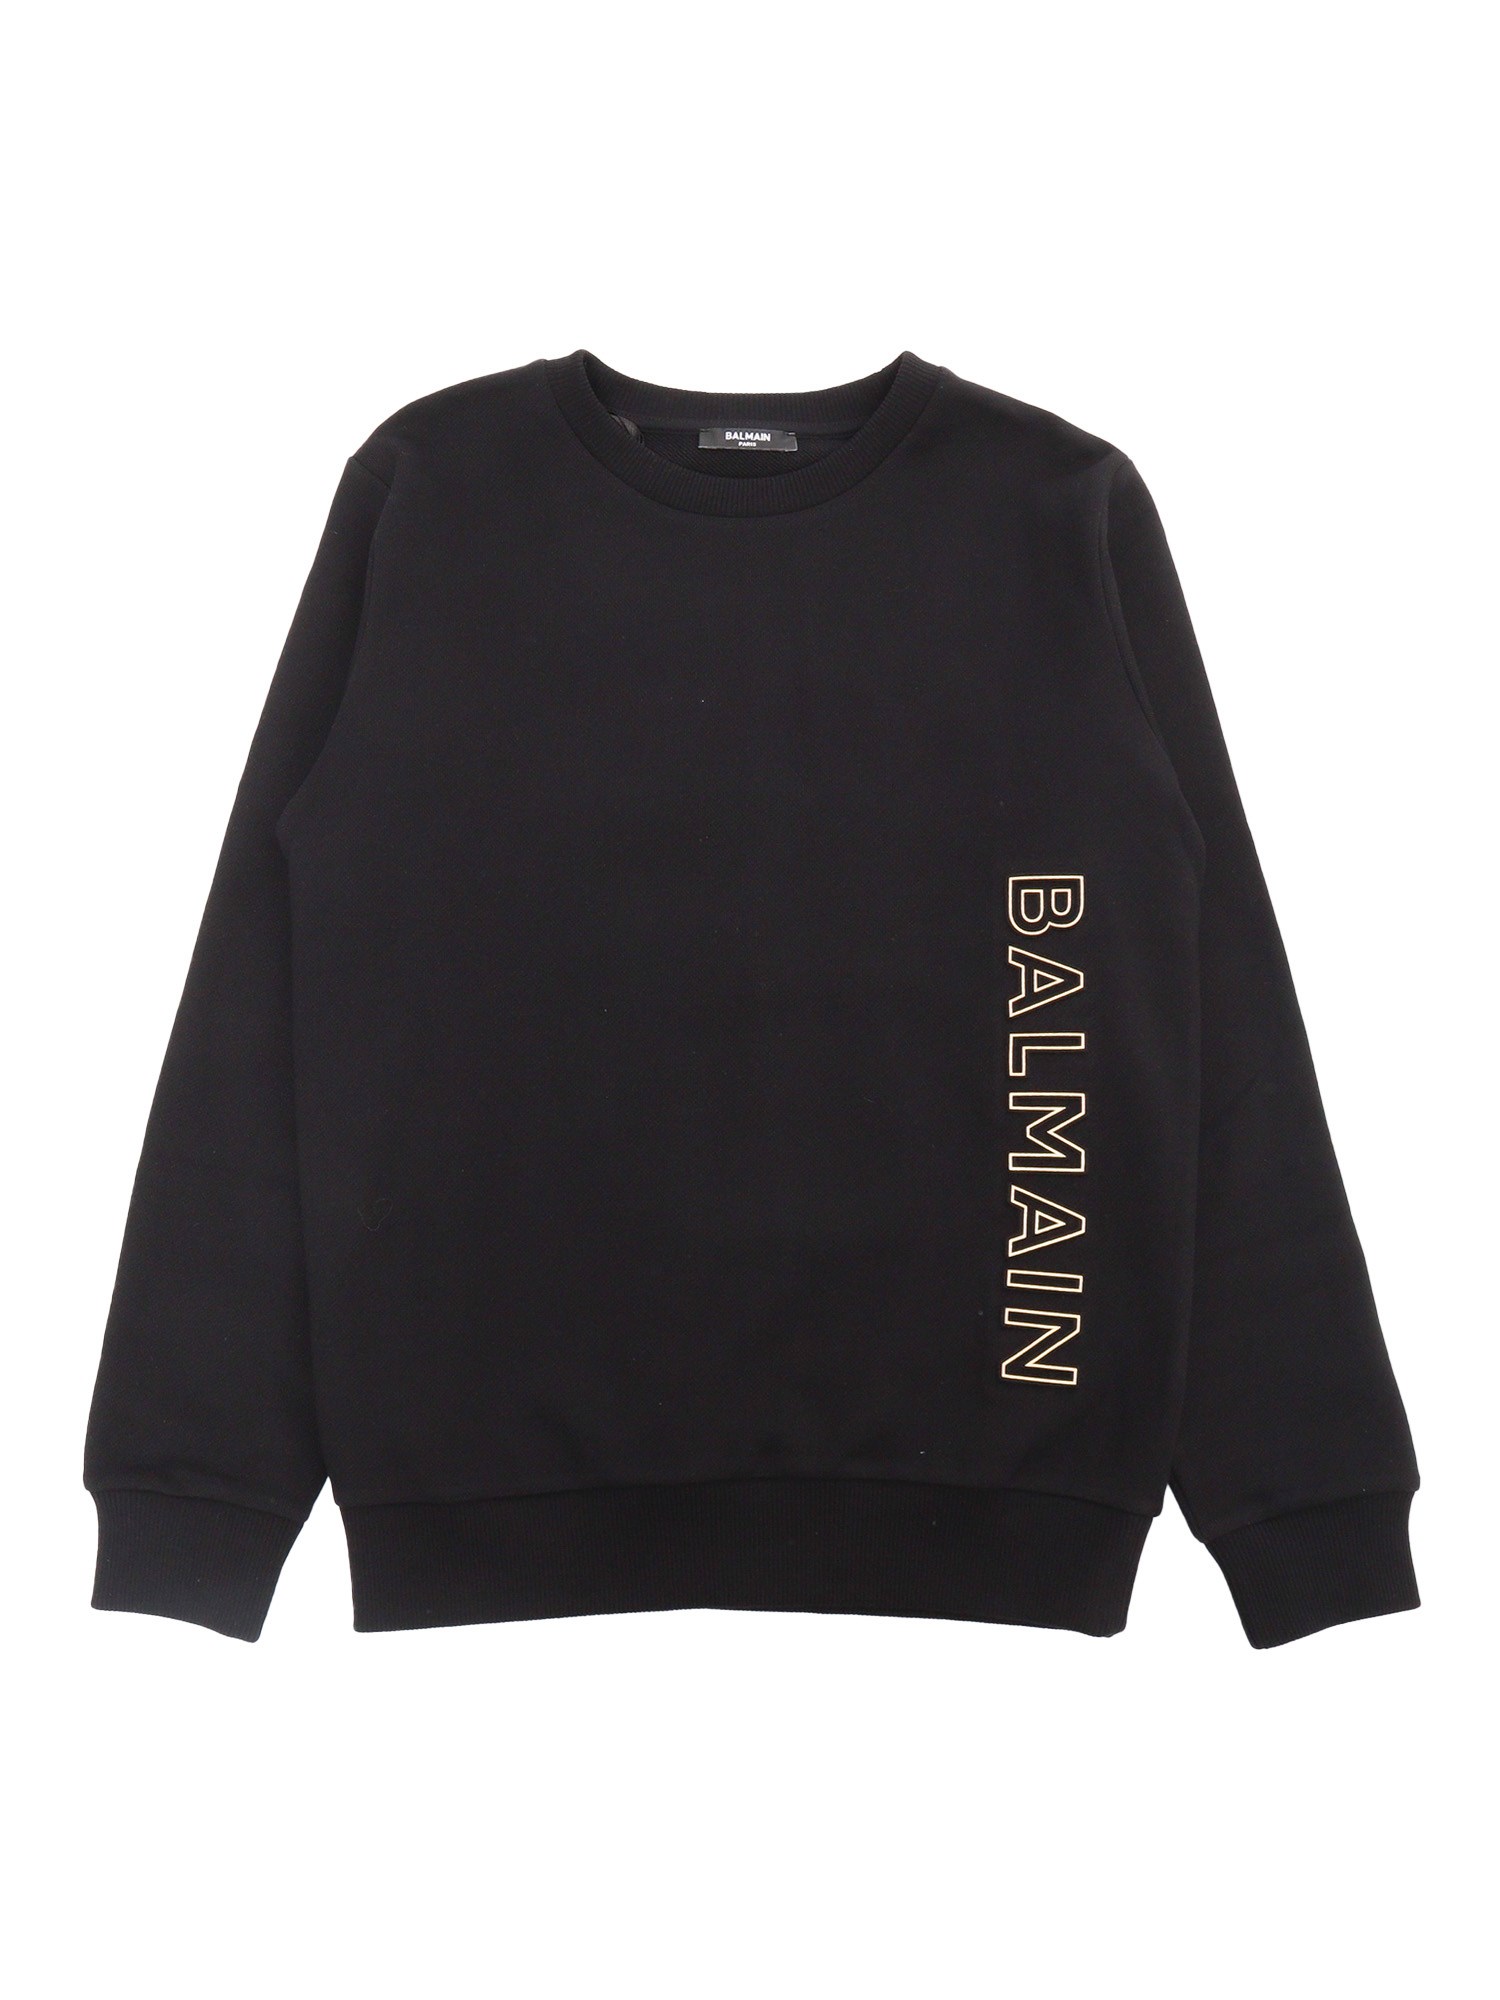 Balmain Black Sweatshirt